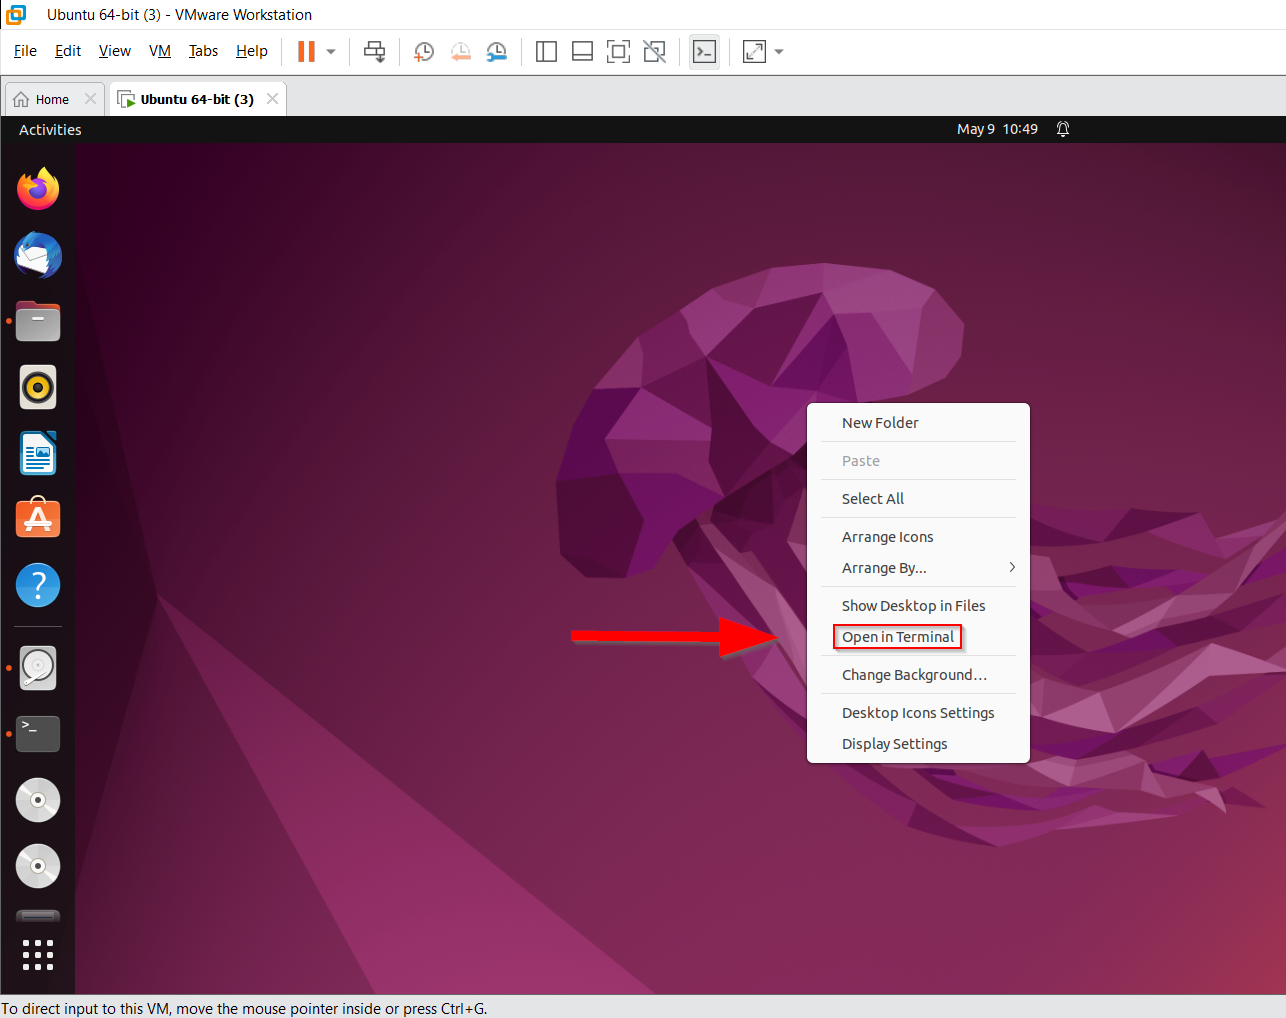 Ubuntu desktop with an menu opened that has the “Open in Terminal” option